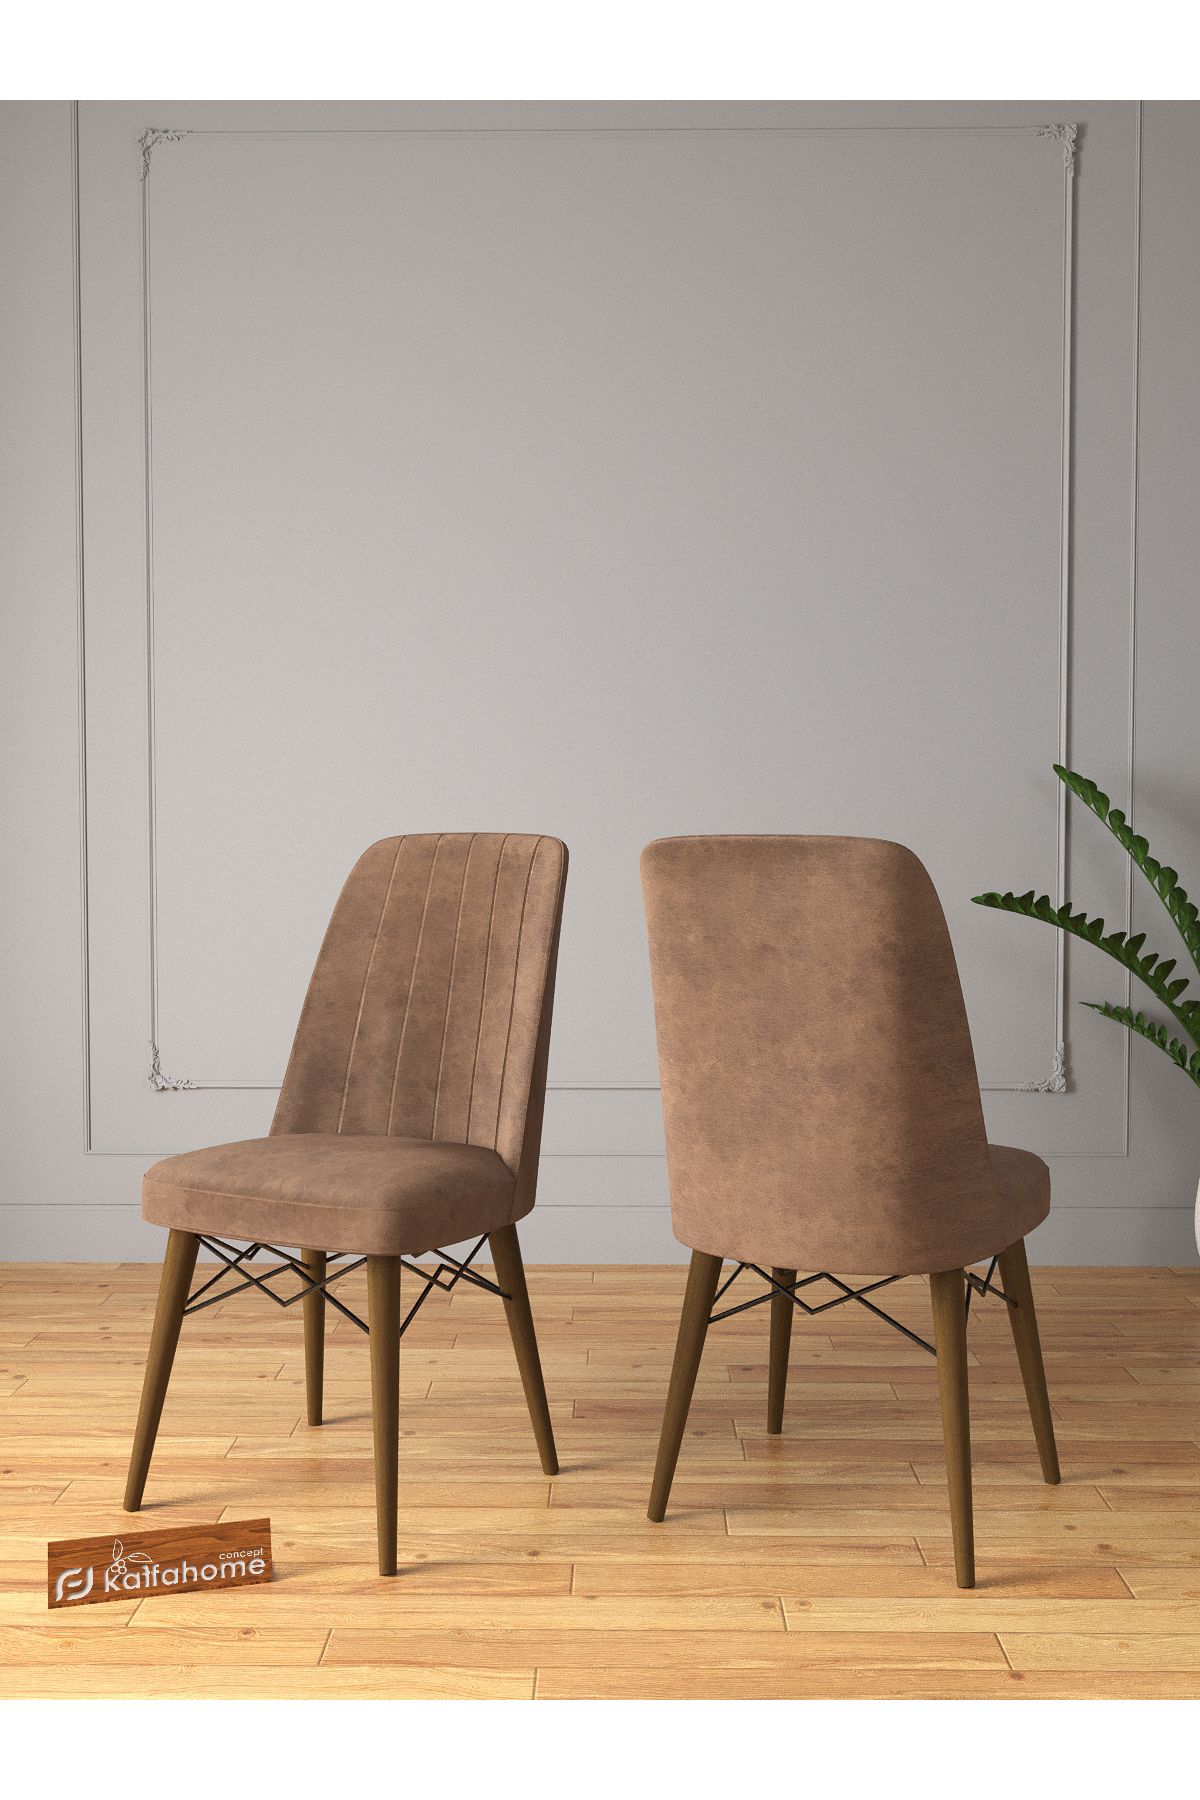 Kaffahome Aras Serisi ,1 Adet Silinebilir Nubuk Kumaş , Sandalye , Mutfak Sandalyesi - Kahverengi